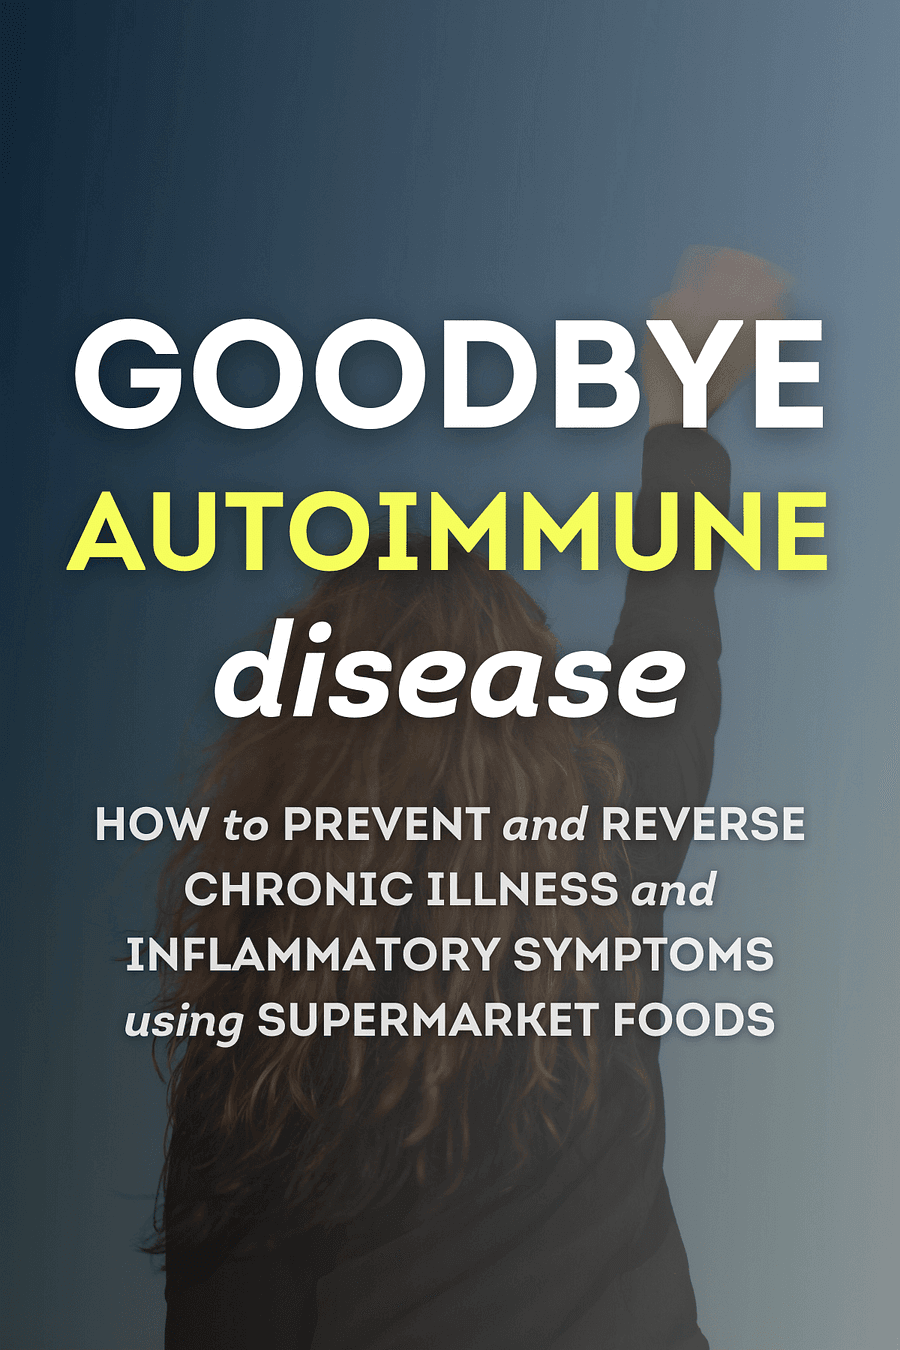 Goodbye Autoimmune Disease by Brooke Goldner - Book Summary